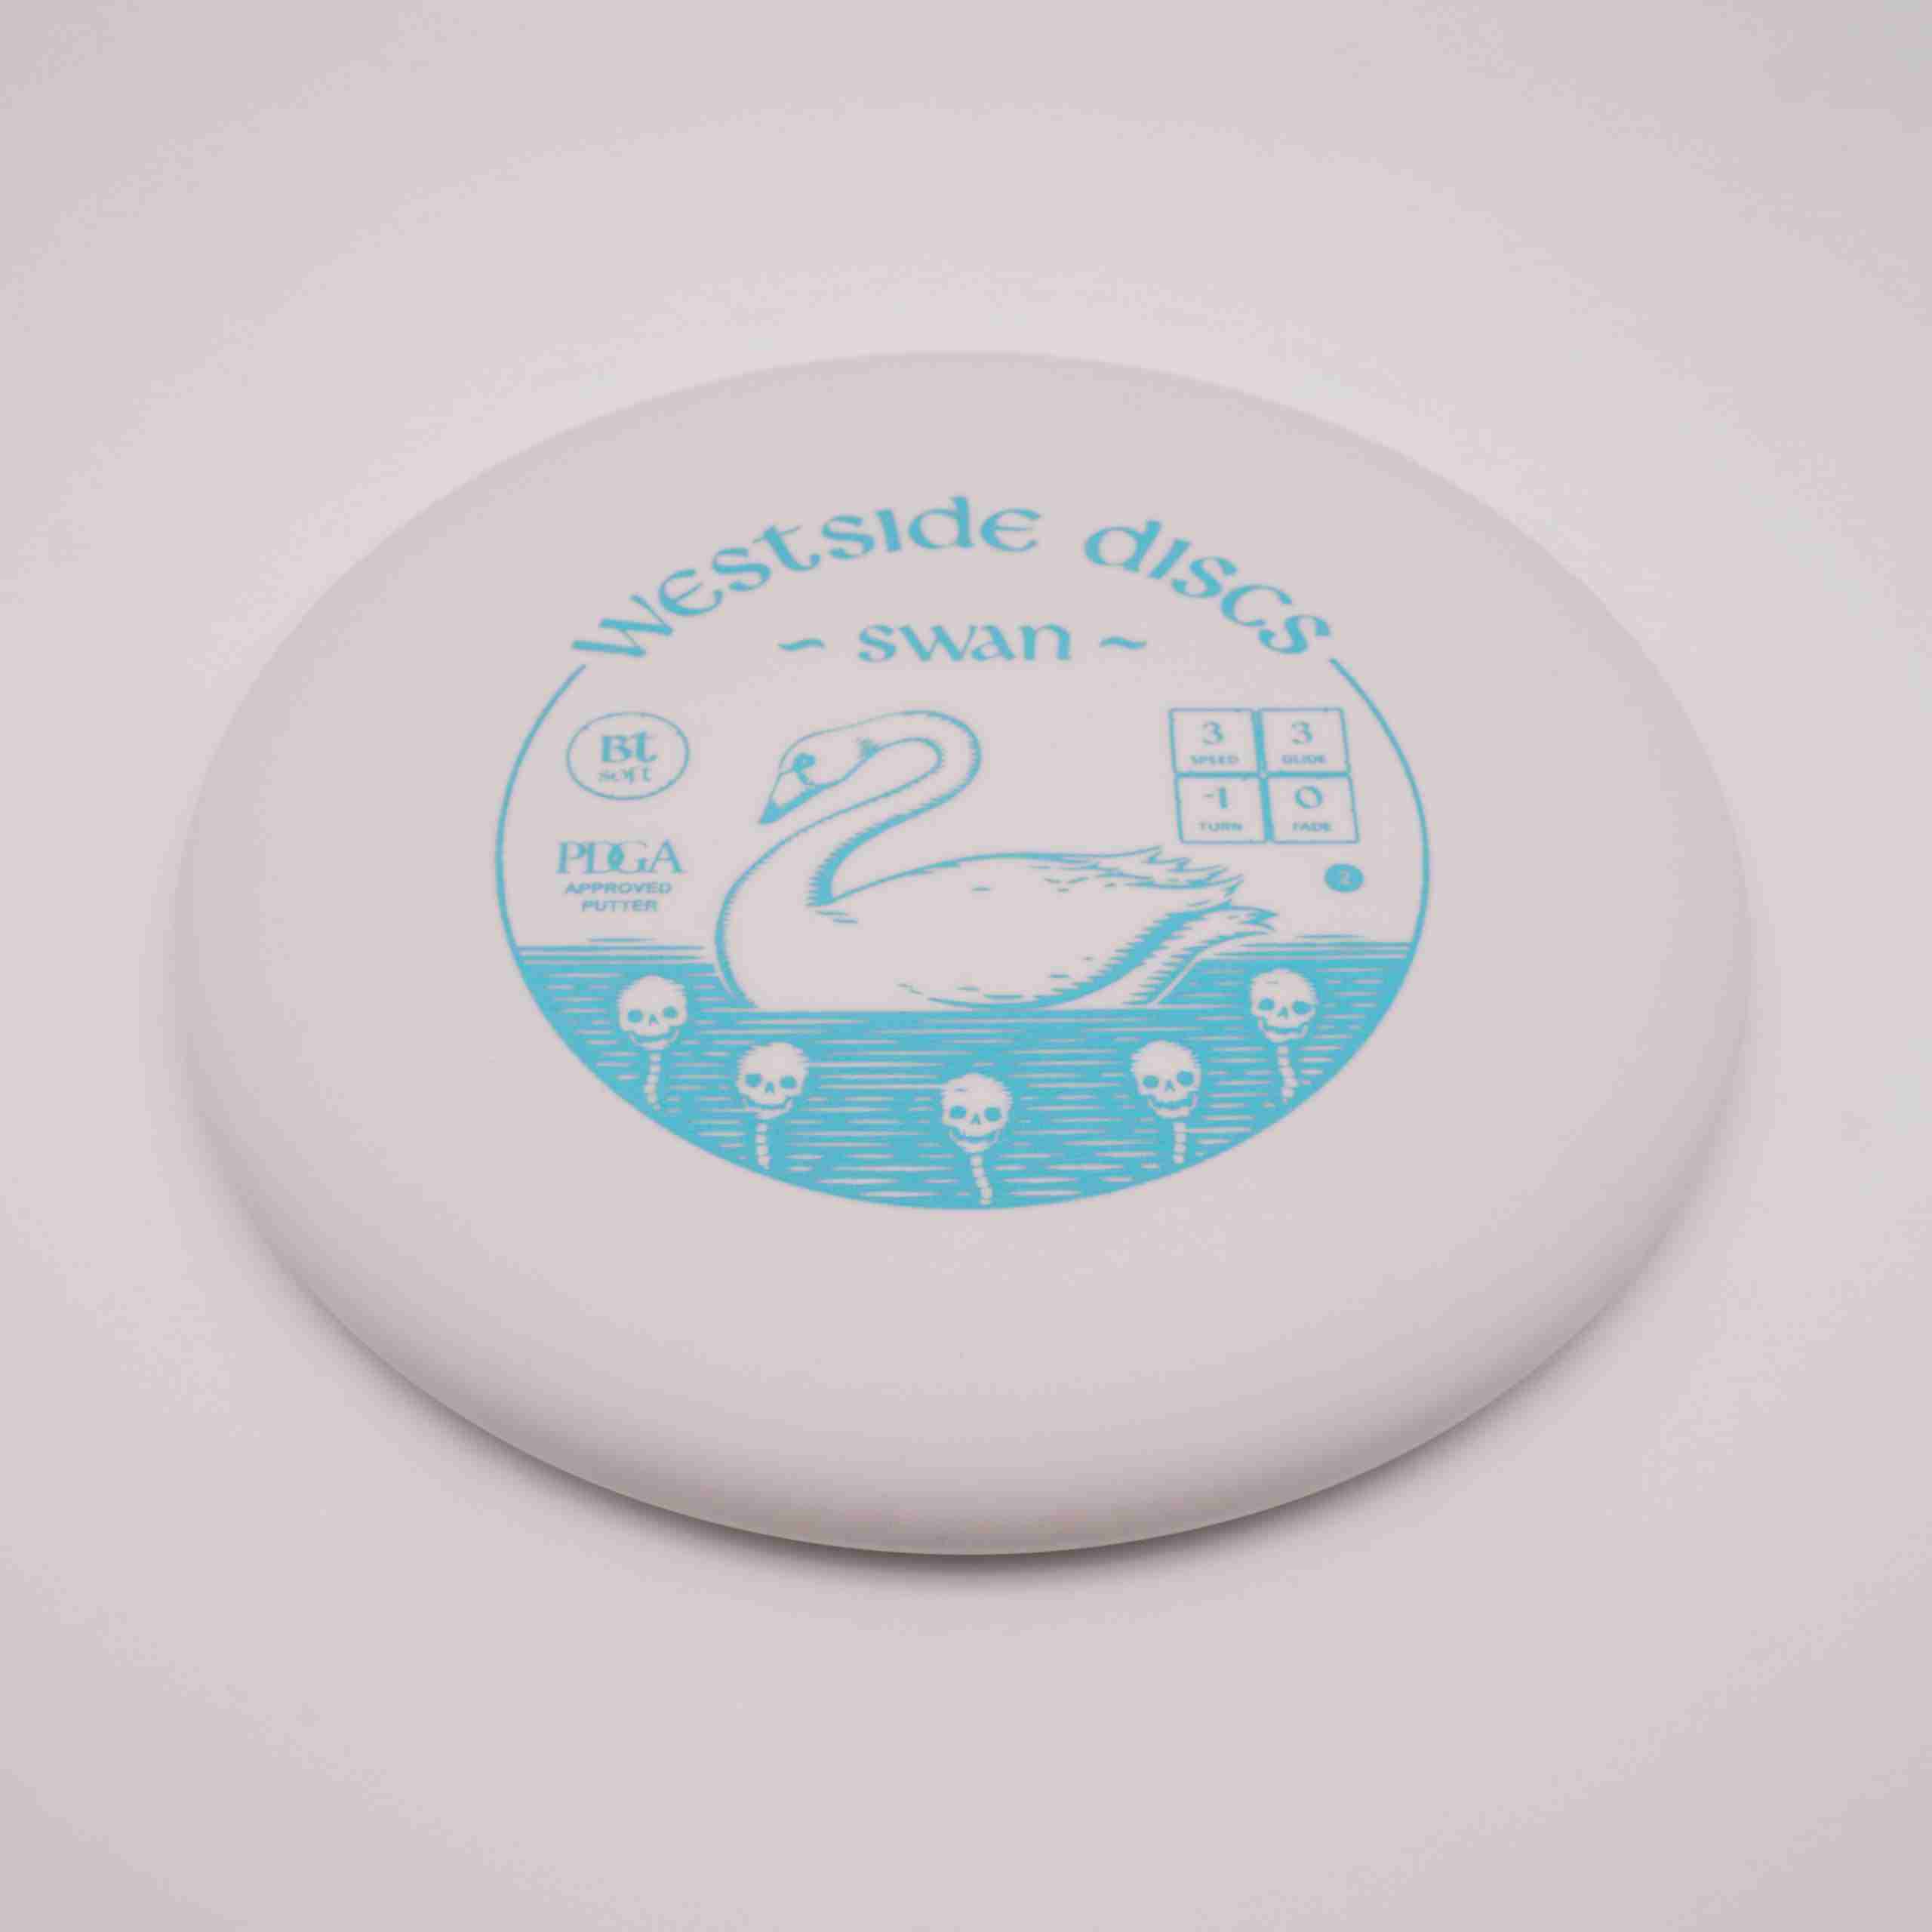 Westside Discs | BT Soft | Swan 2